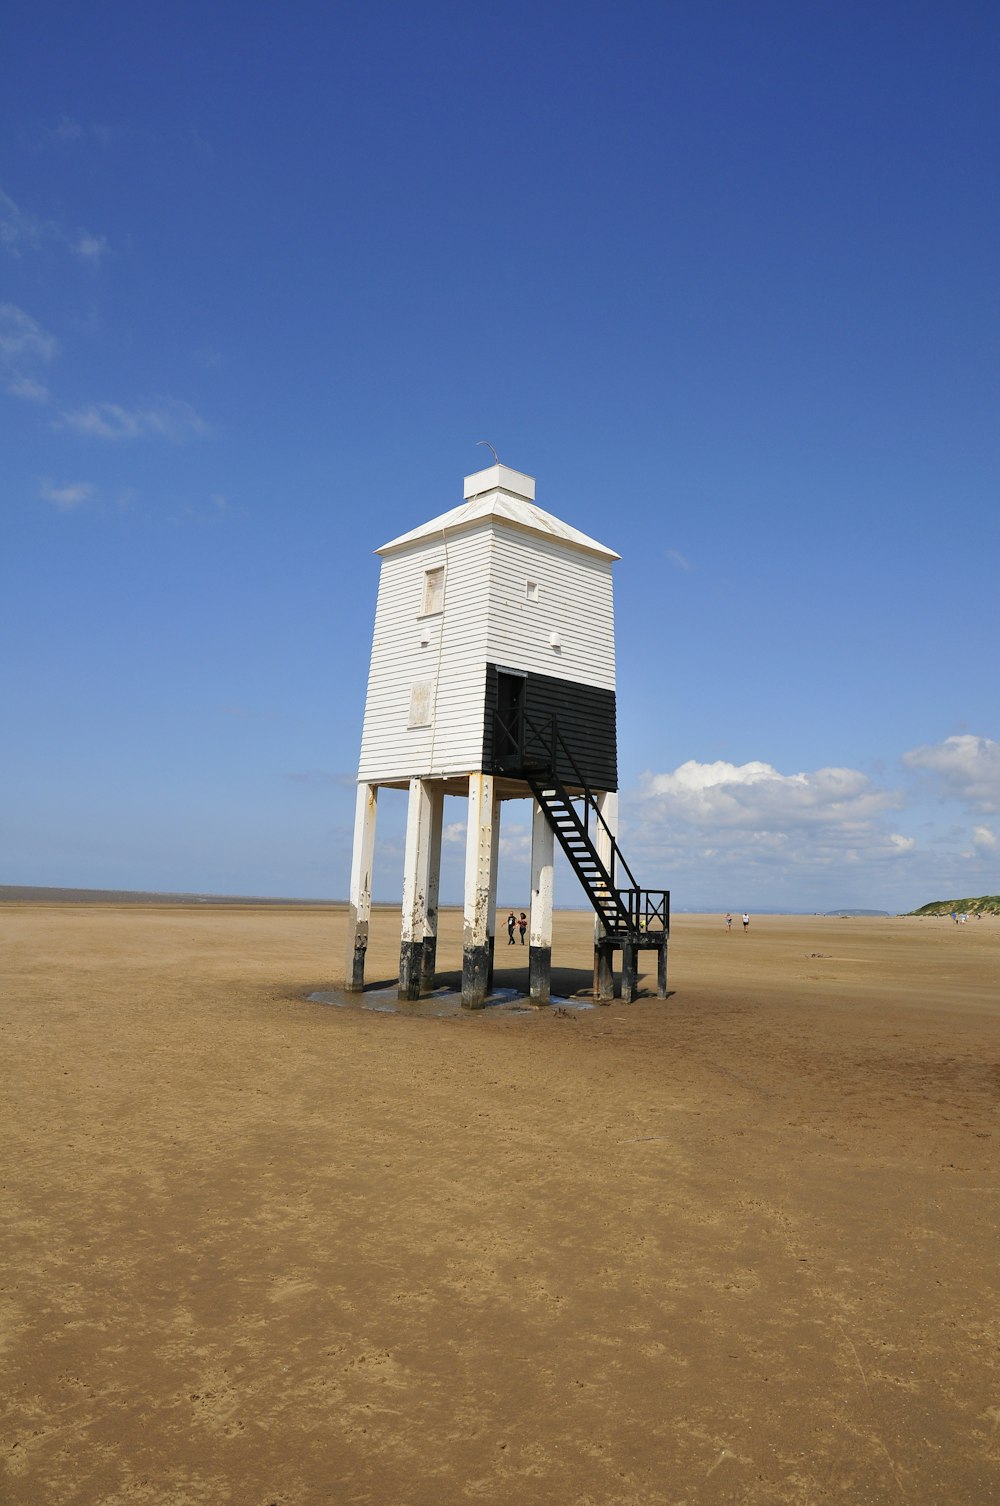 a lifeguard tower on a sandy beach